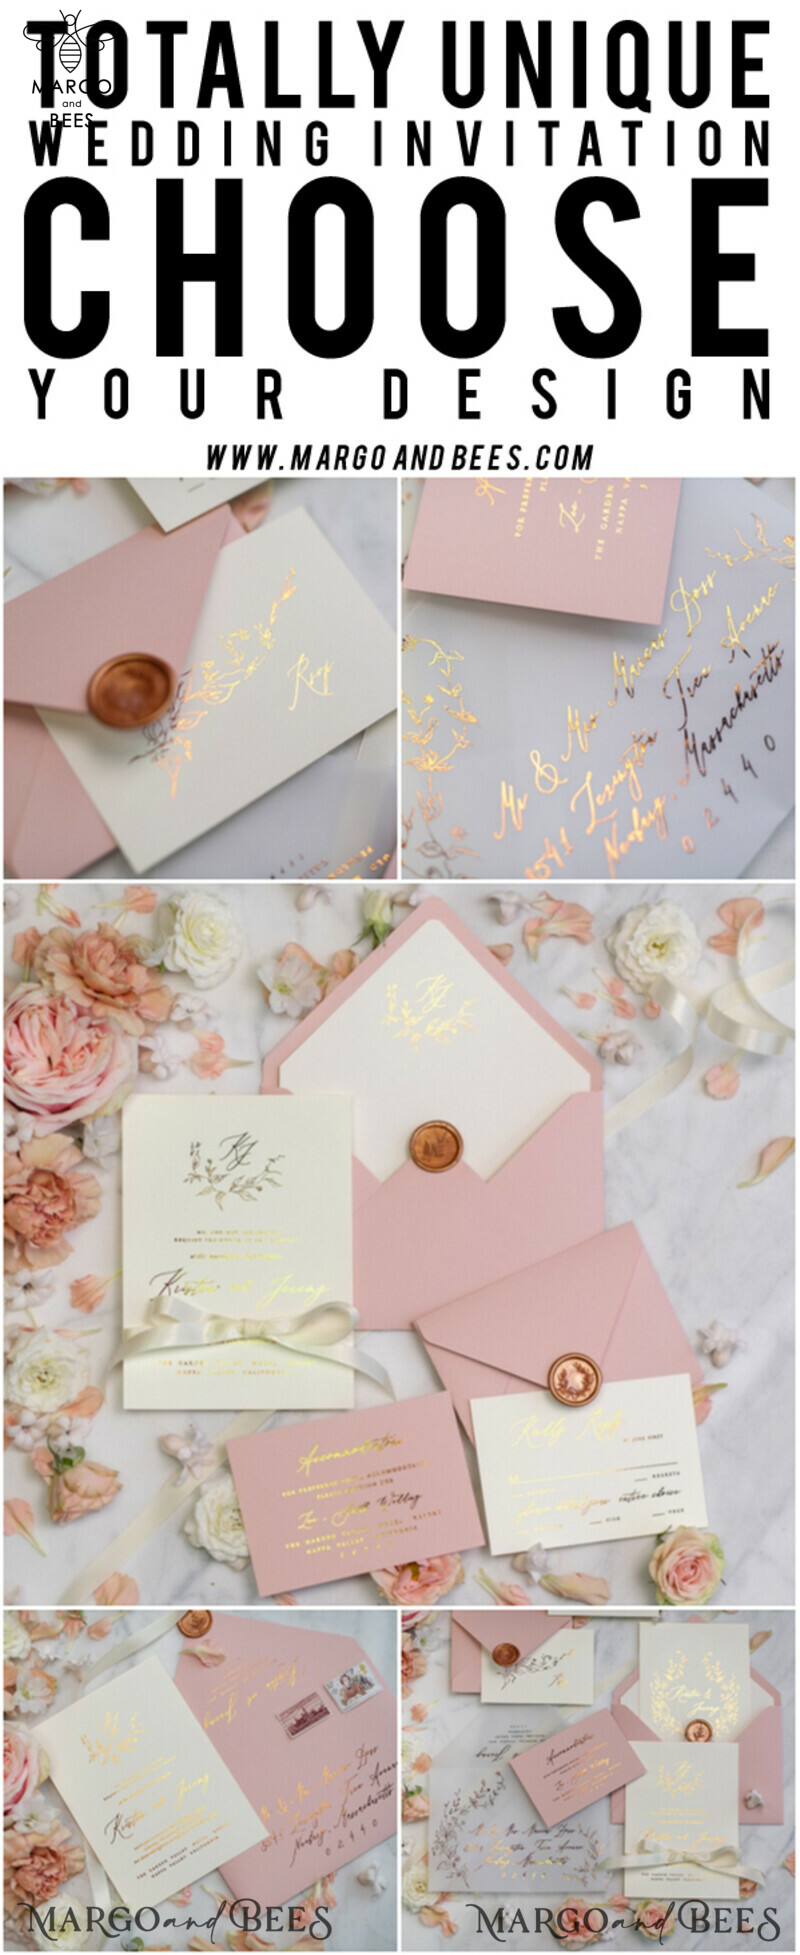 Exquisite Blush Pink and Gold Foil Wedding Invitations: A Unique Vellum Suite for an Elegant Celebration-40